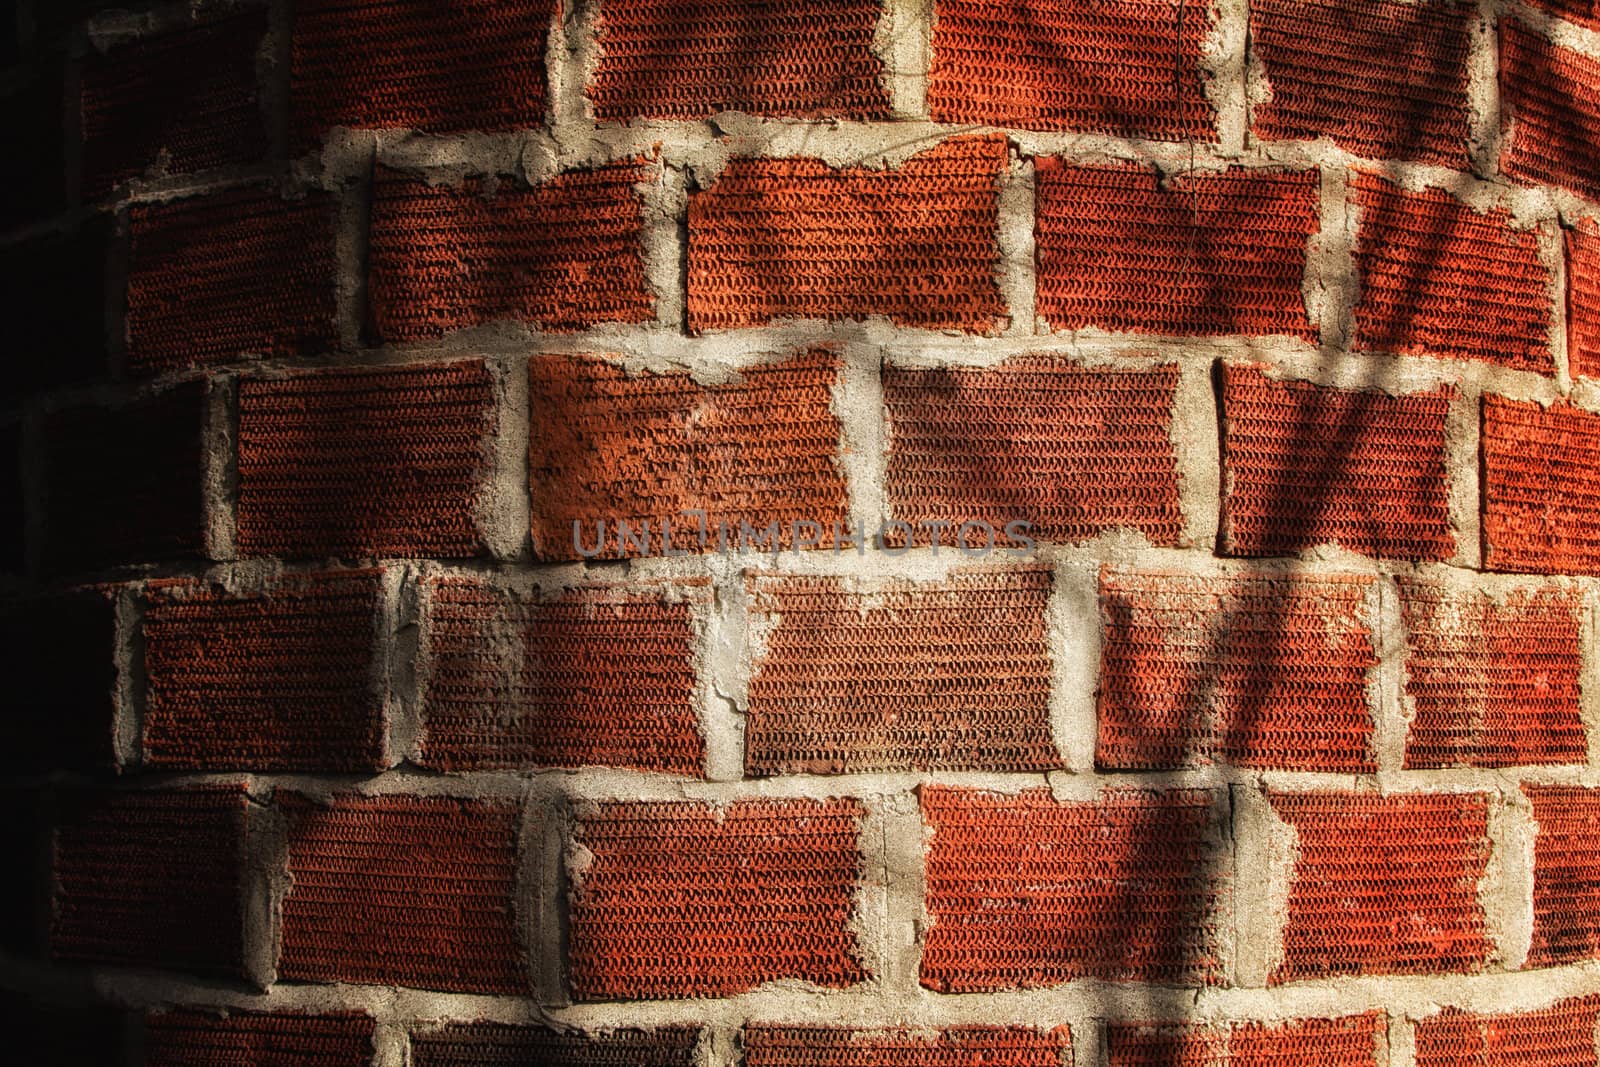 Honeycombed Brick Backdrop or Background of Old Silo.